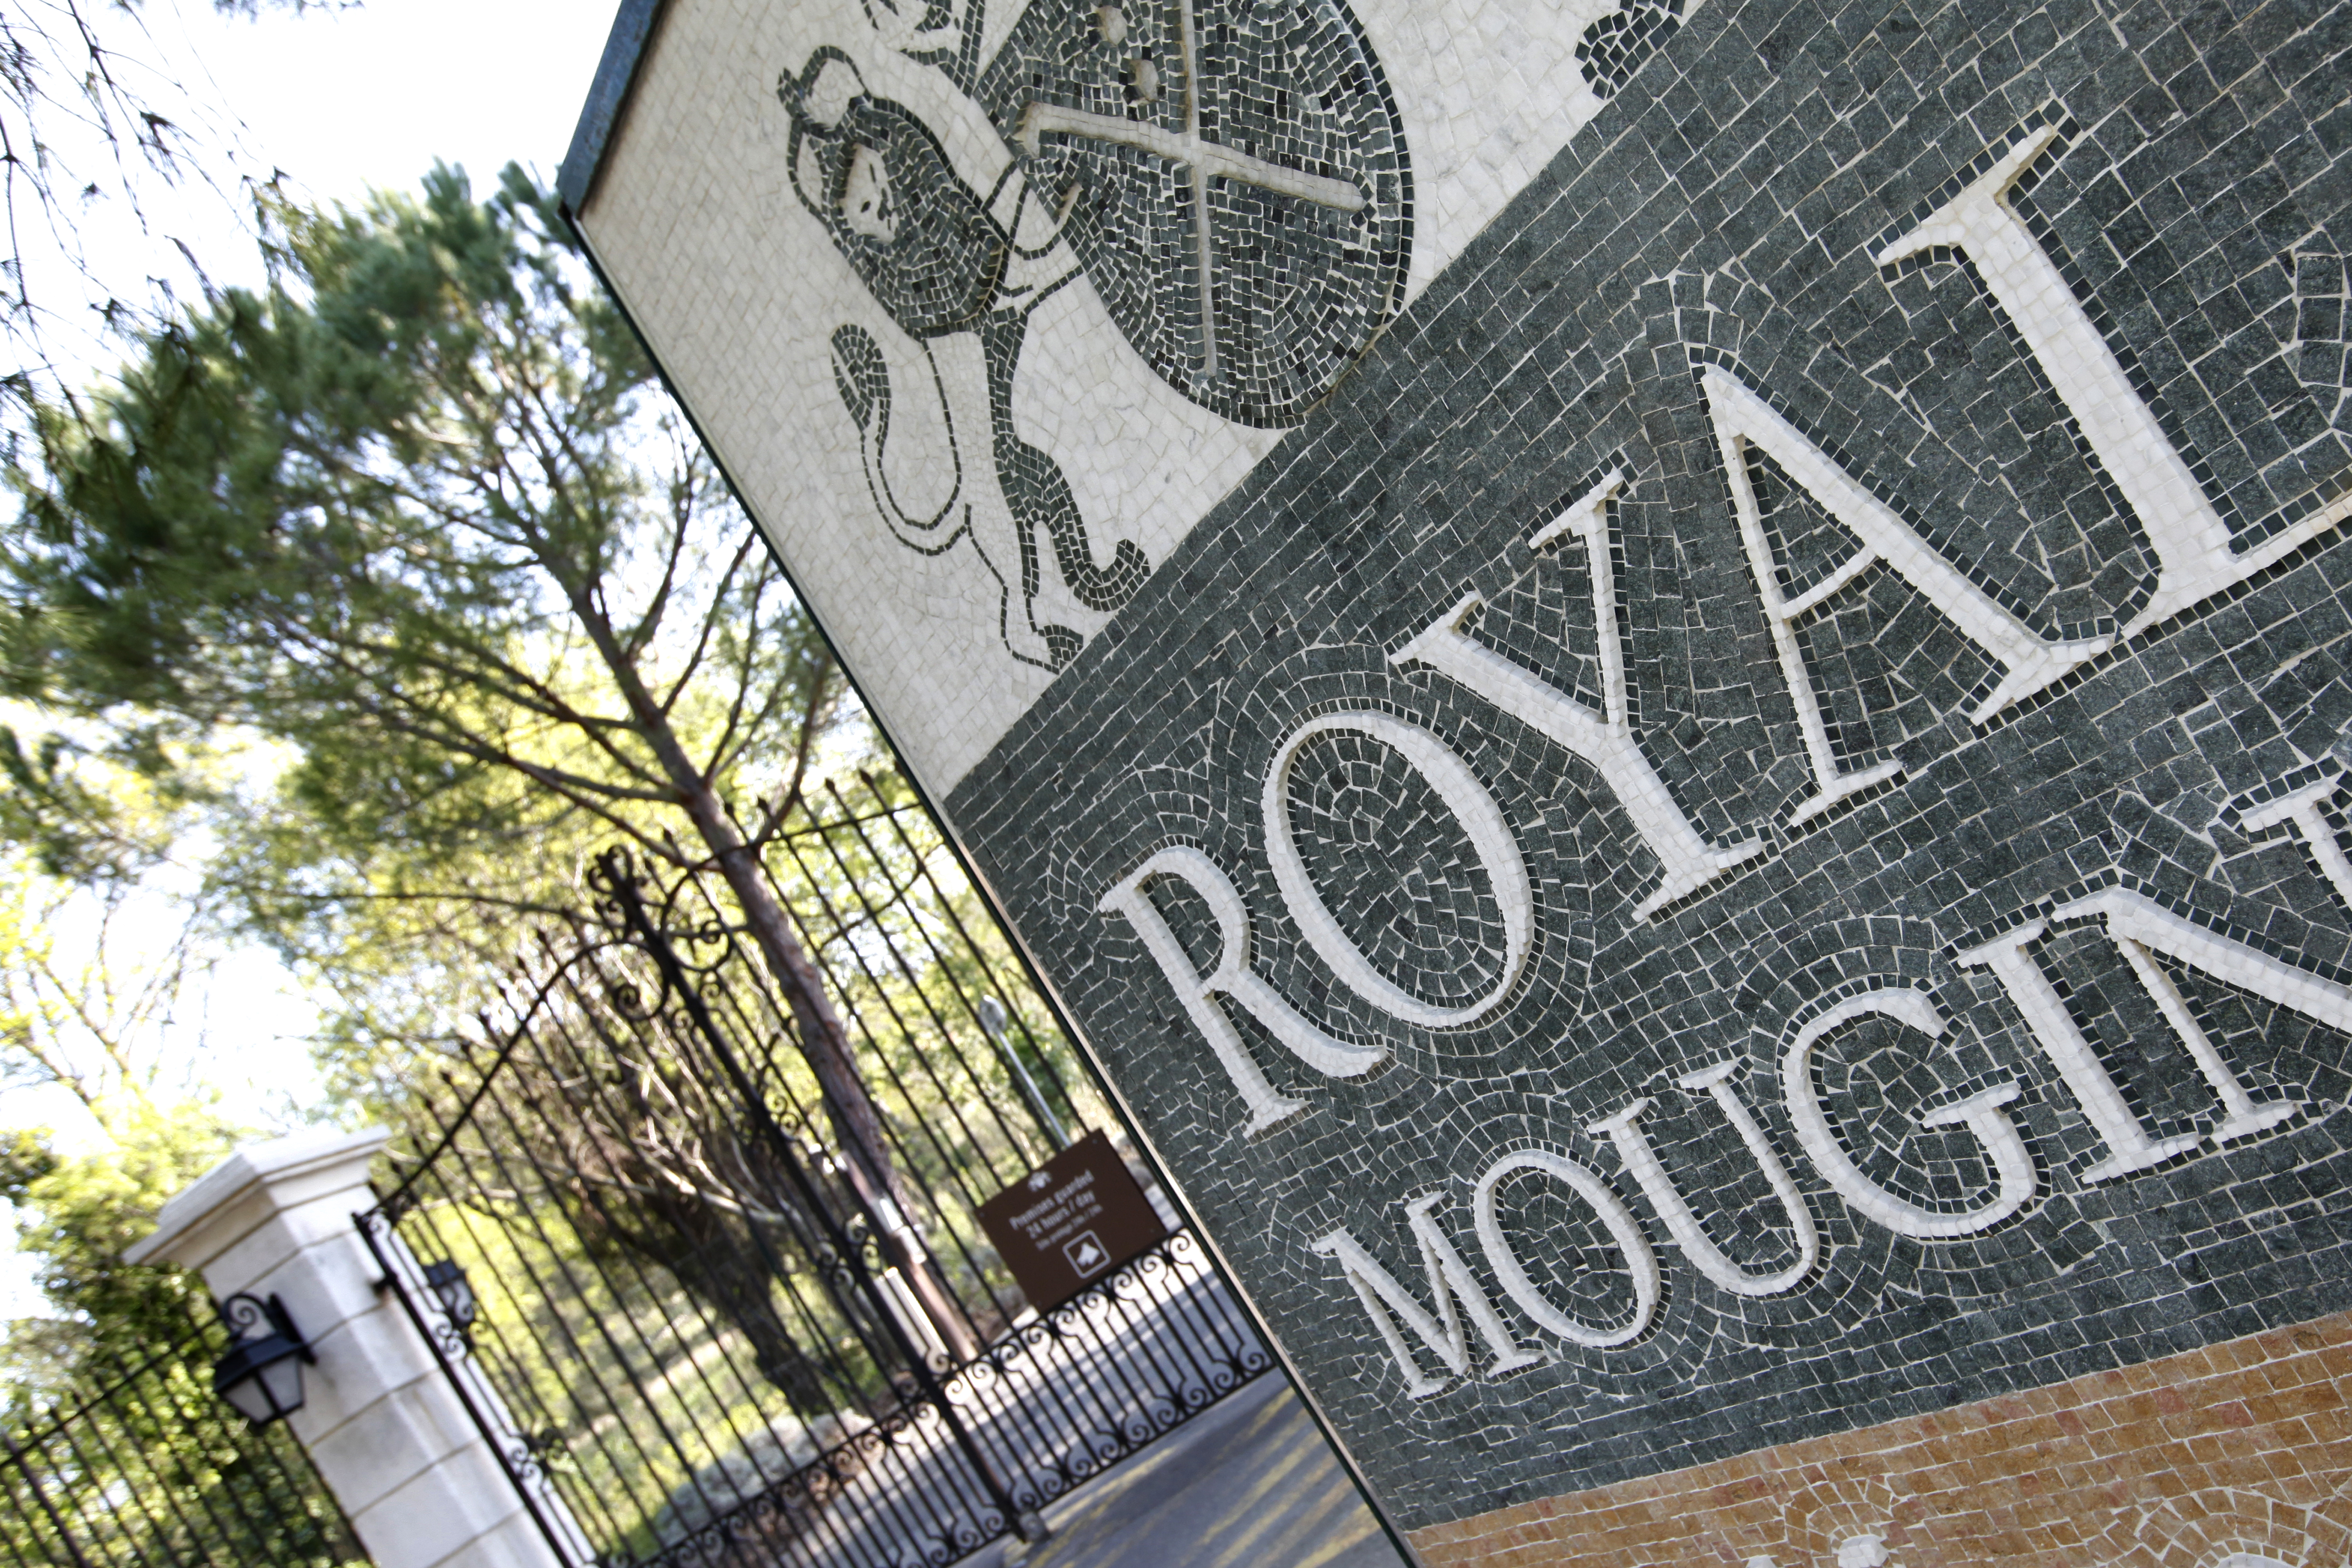 Royal Mougins Golf & Resort